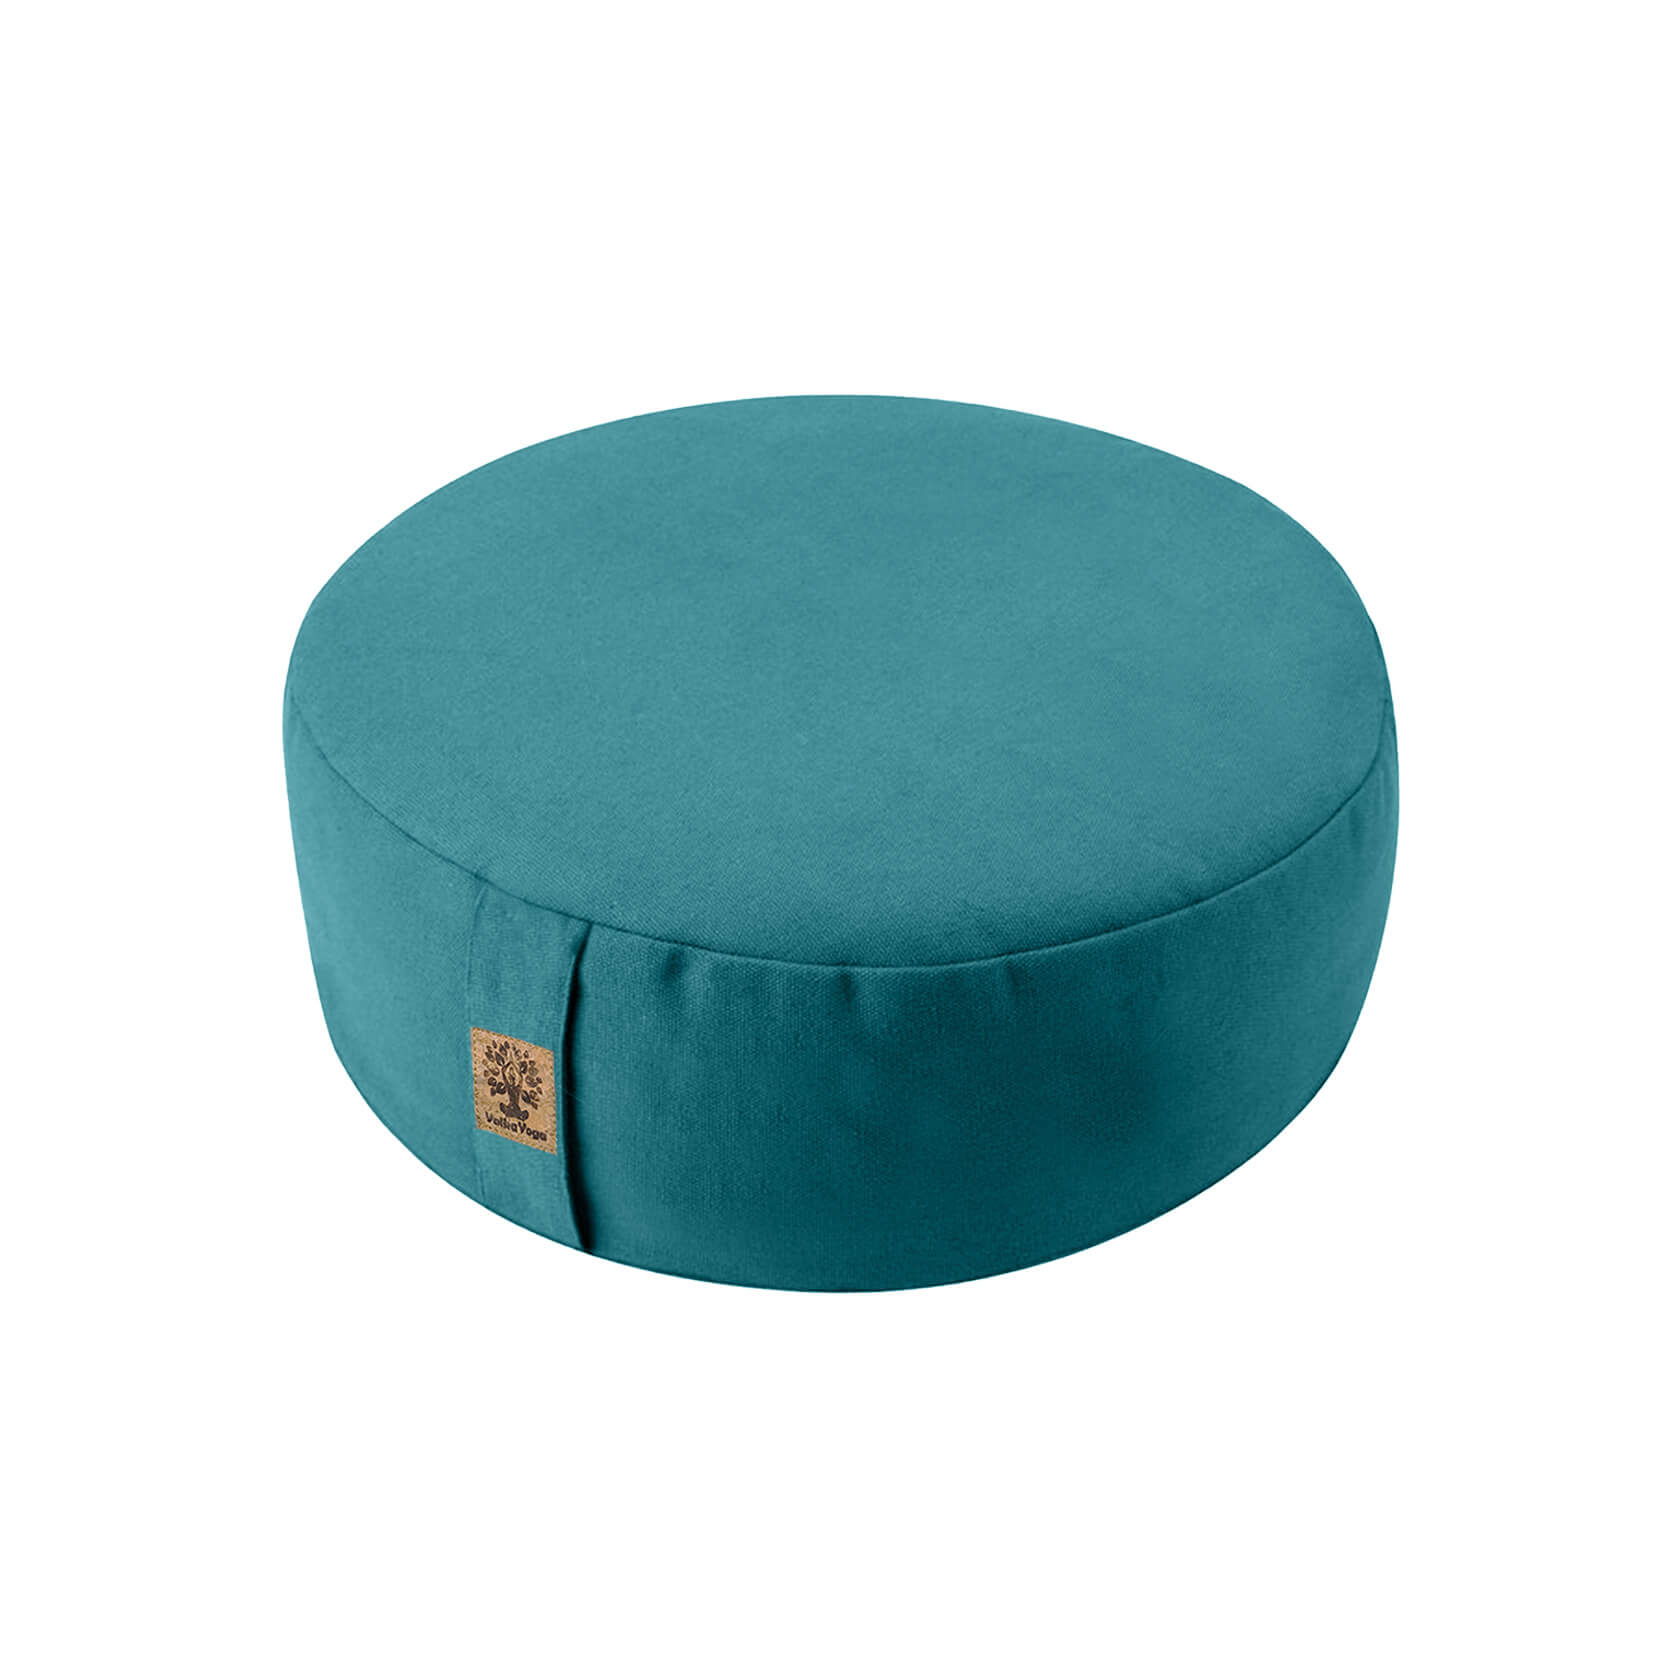 Turquoise cotton meditation cushion